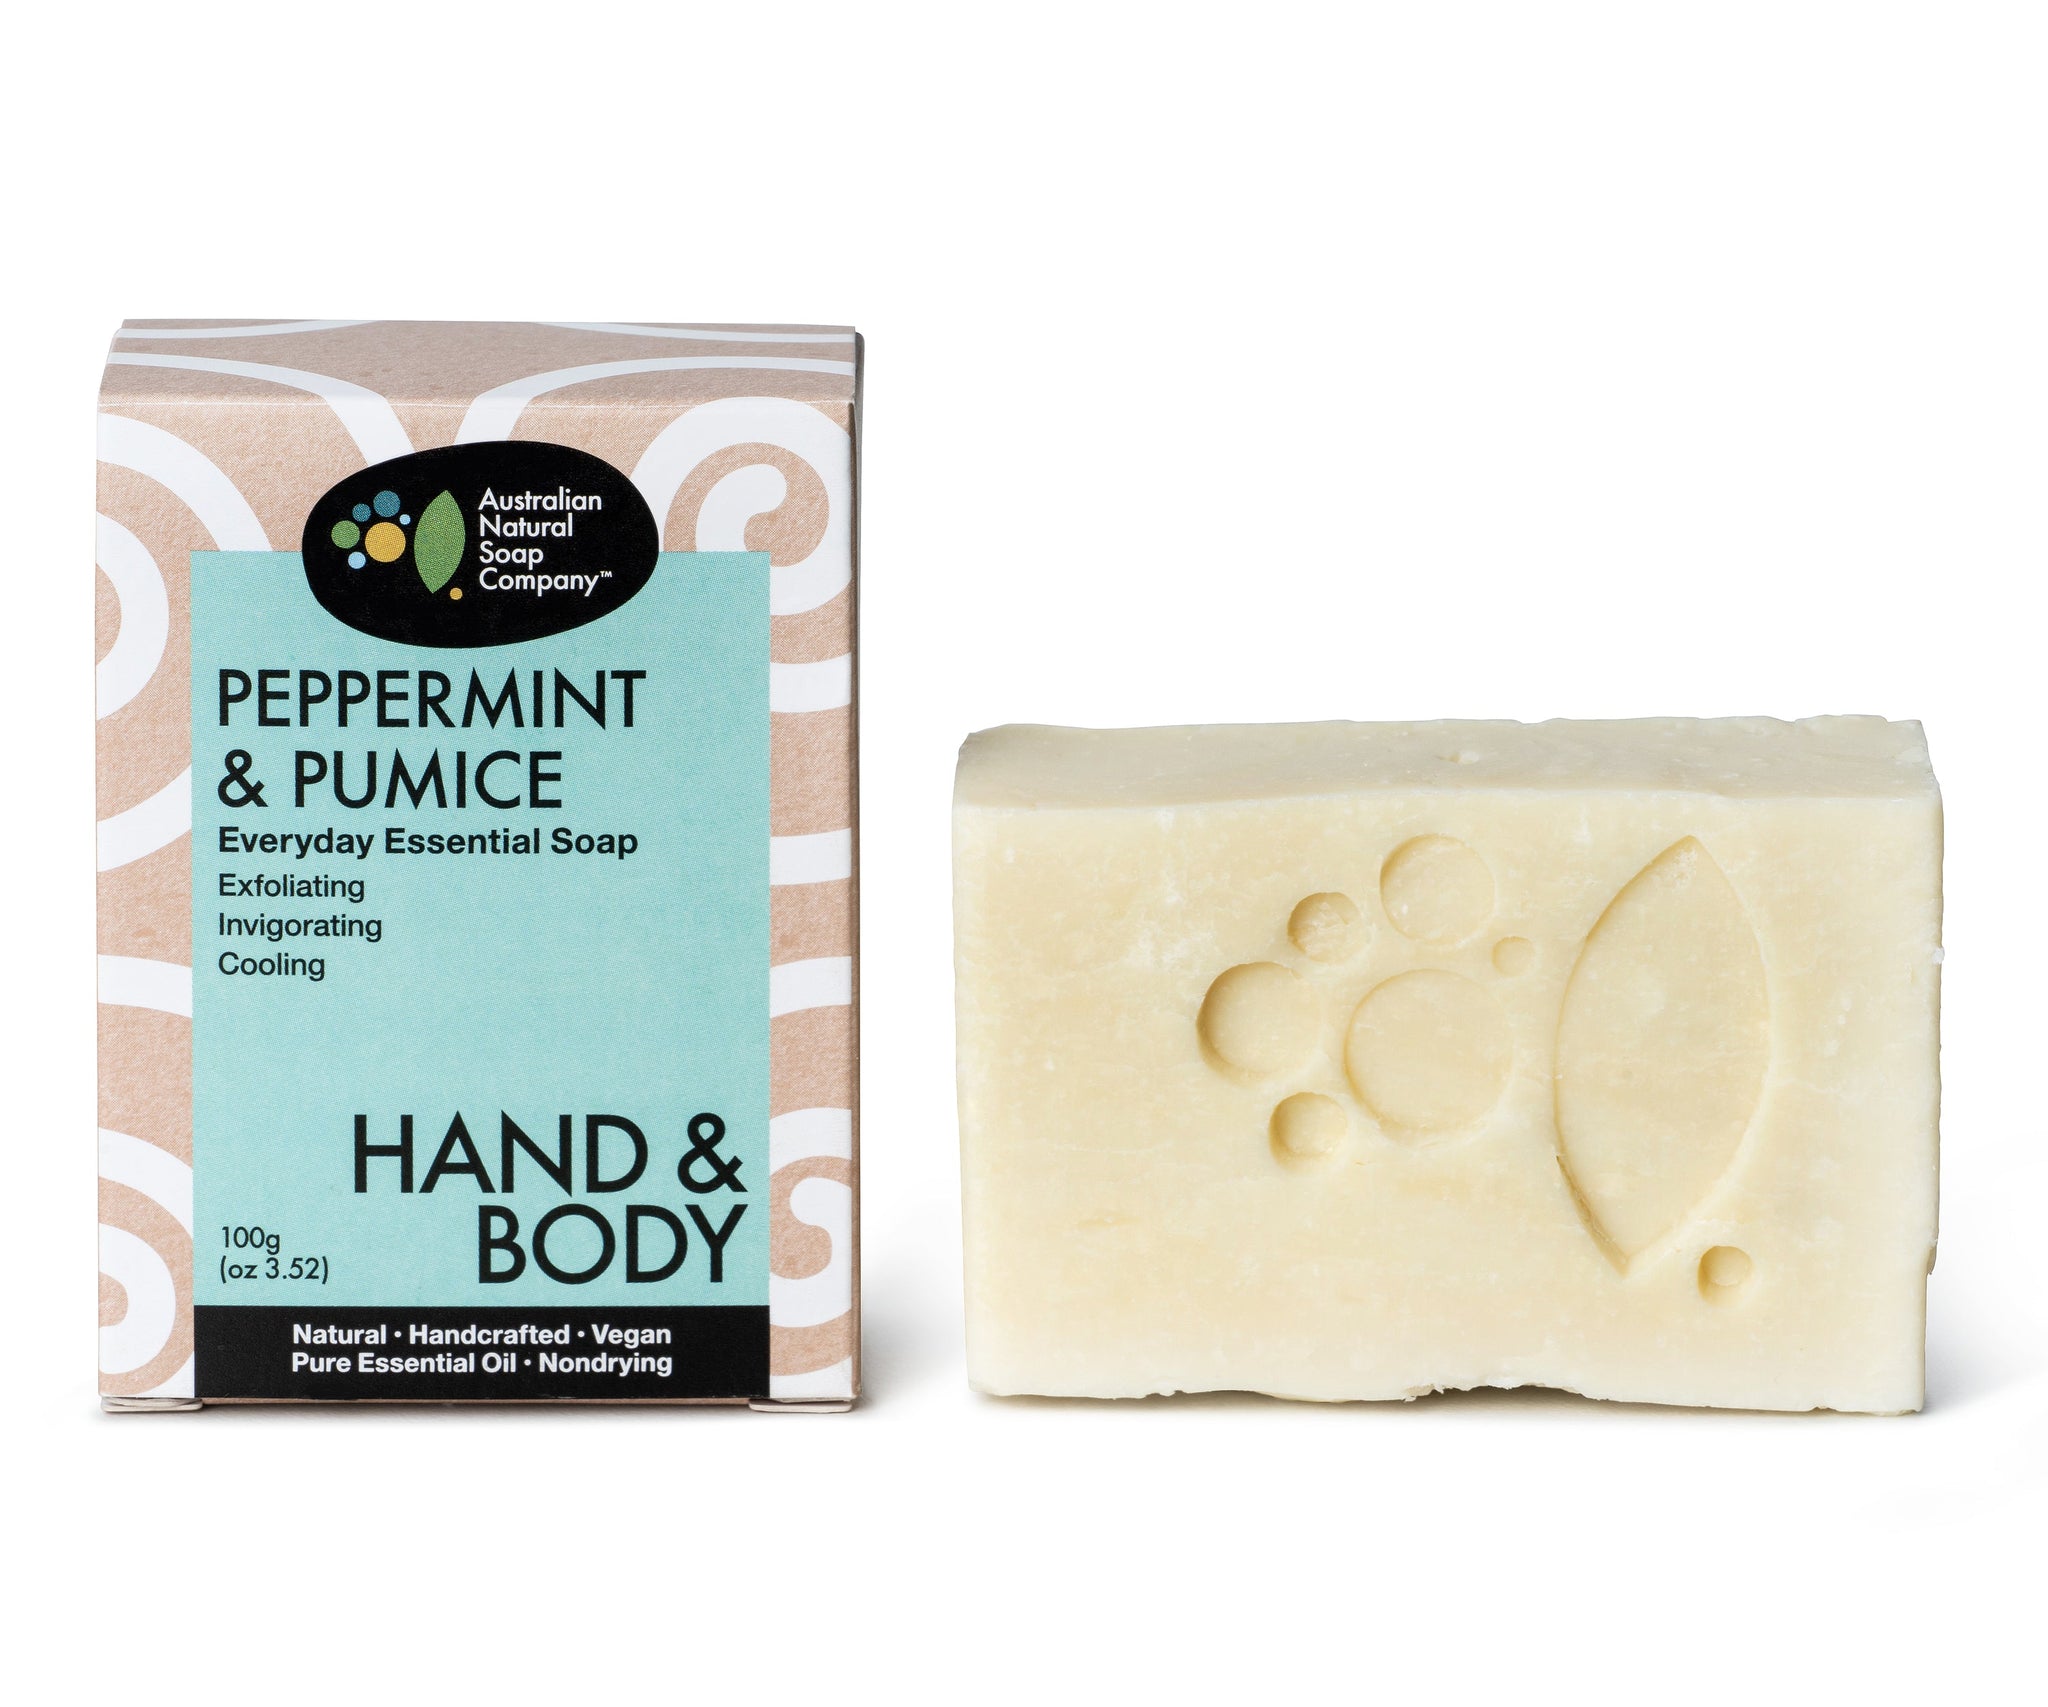 Pumice Body Soap